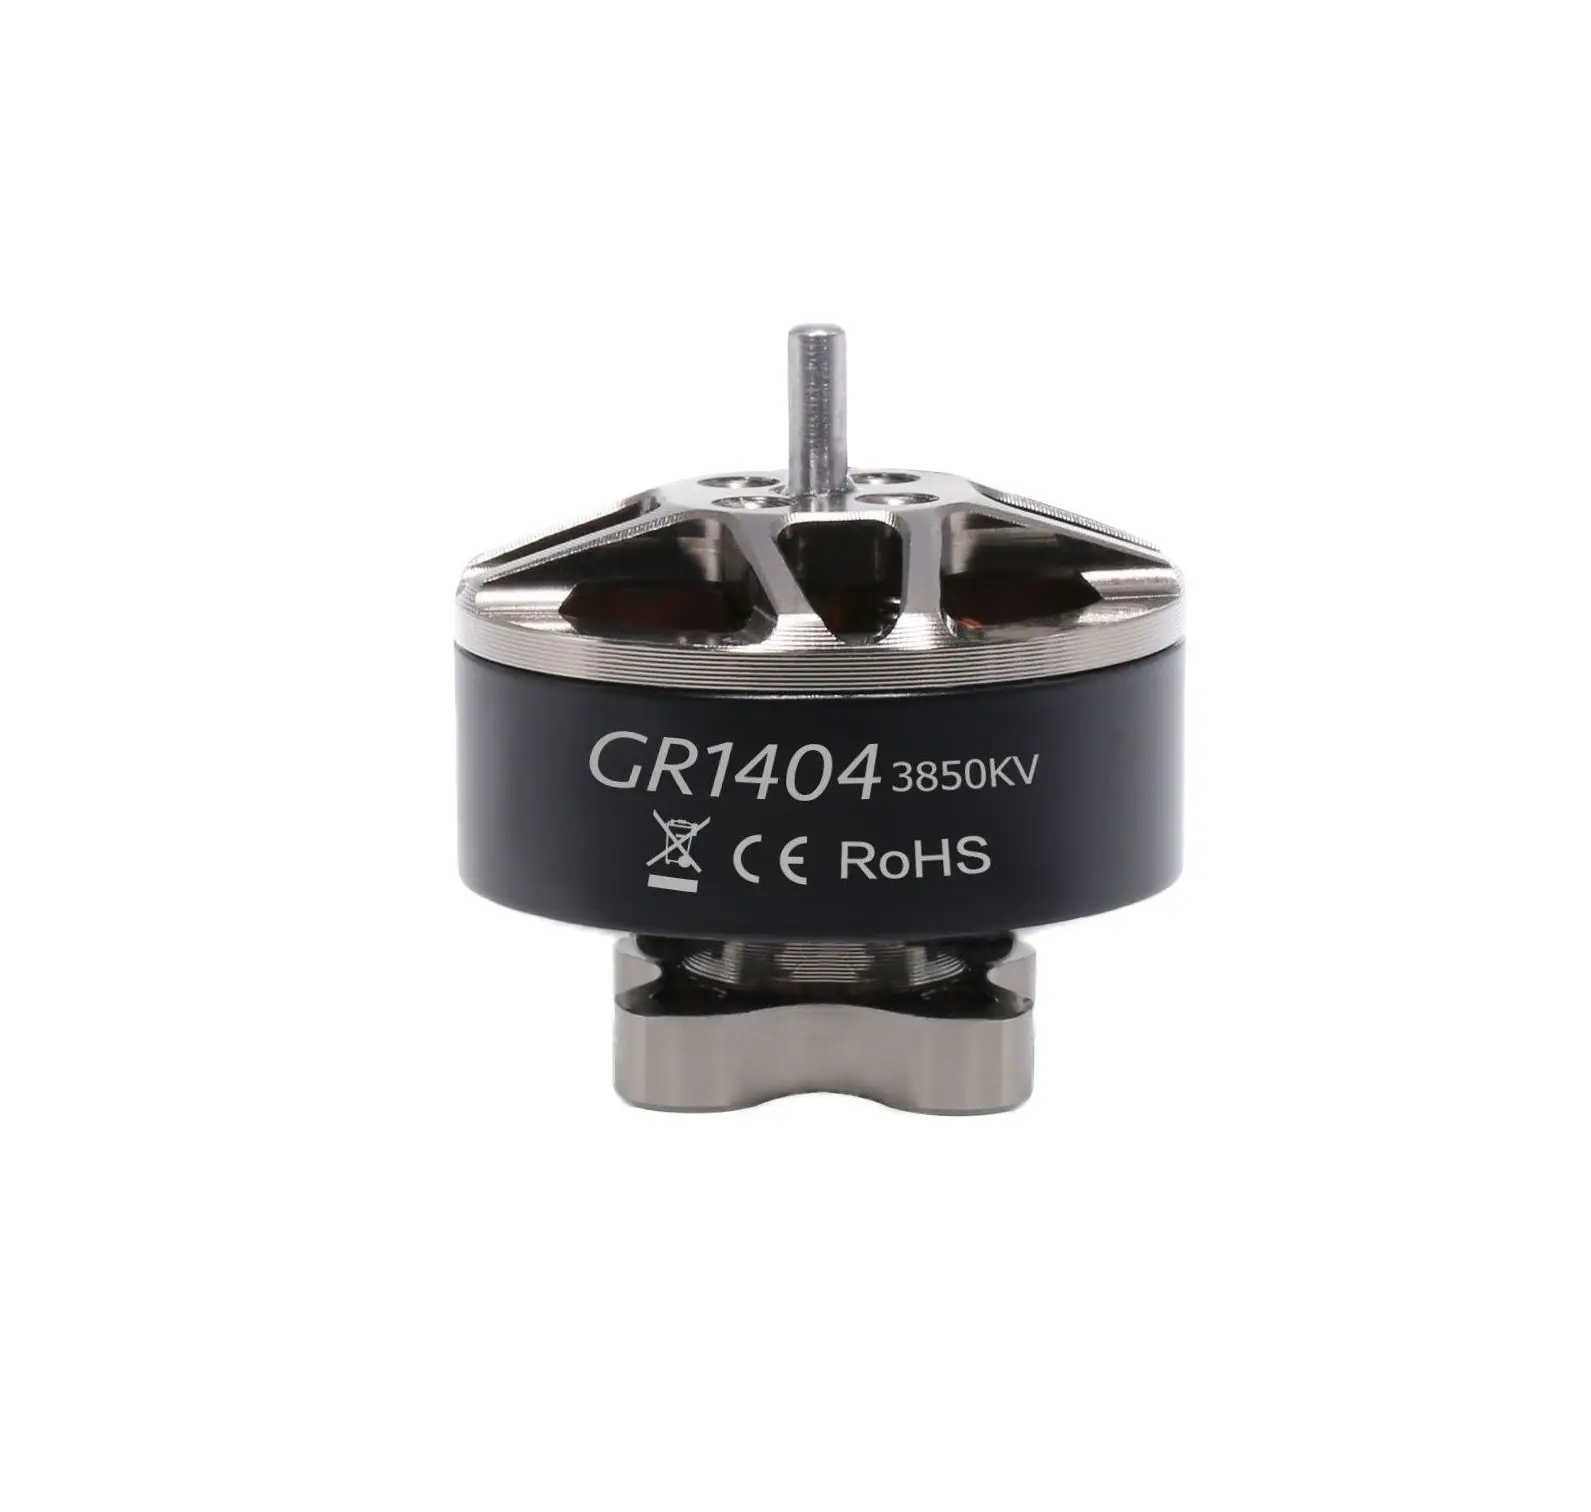 GR1404 3850kv Motor Accessories Stator Diamter 14mm Max Current(180S) 13.38A